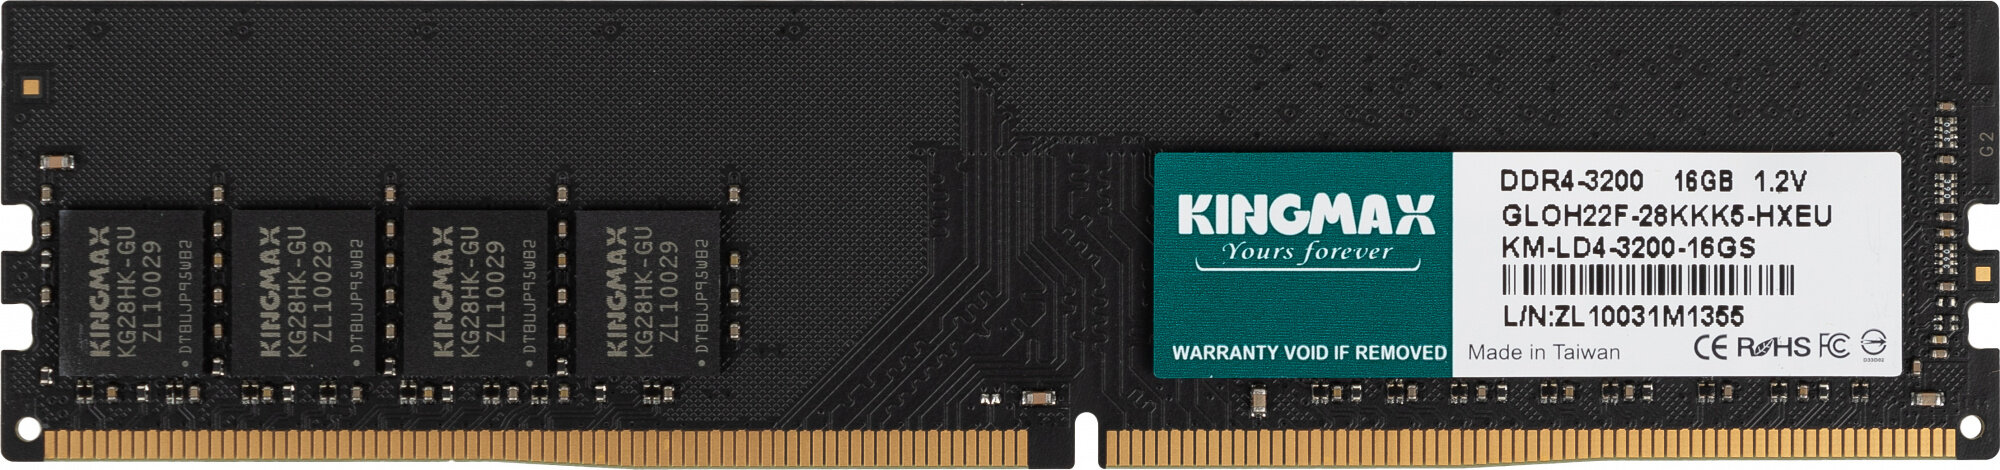 Kingmax Память DDR4 16Gb 3200MHz Kingmax KM-LD4-3200-16GS RTL PC4-25600 CL22 DIMM 288-pin 1.2В